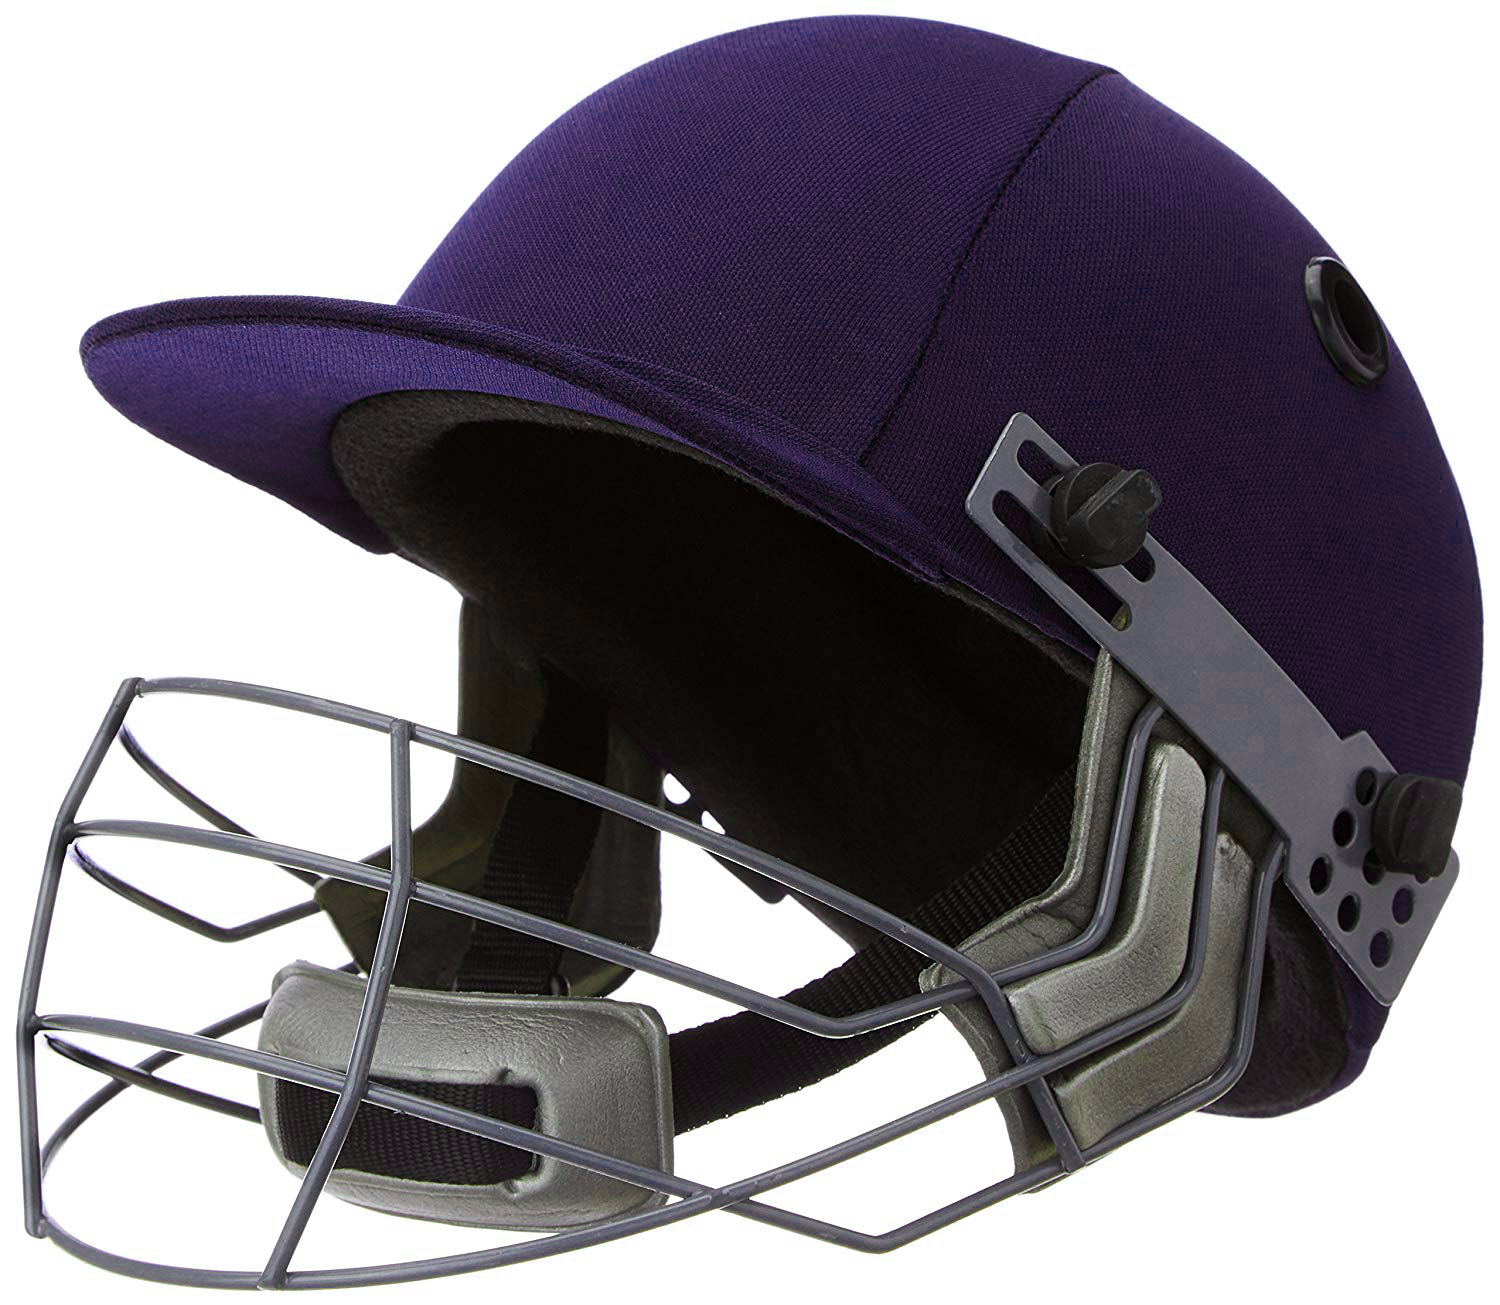 Cricket Helmet: Its features and materials